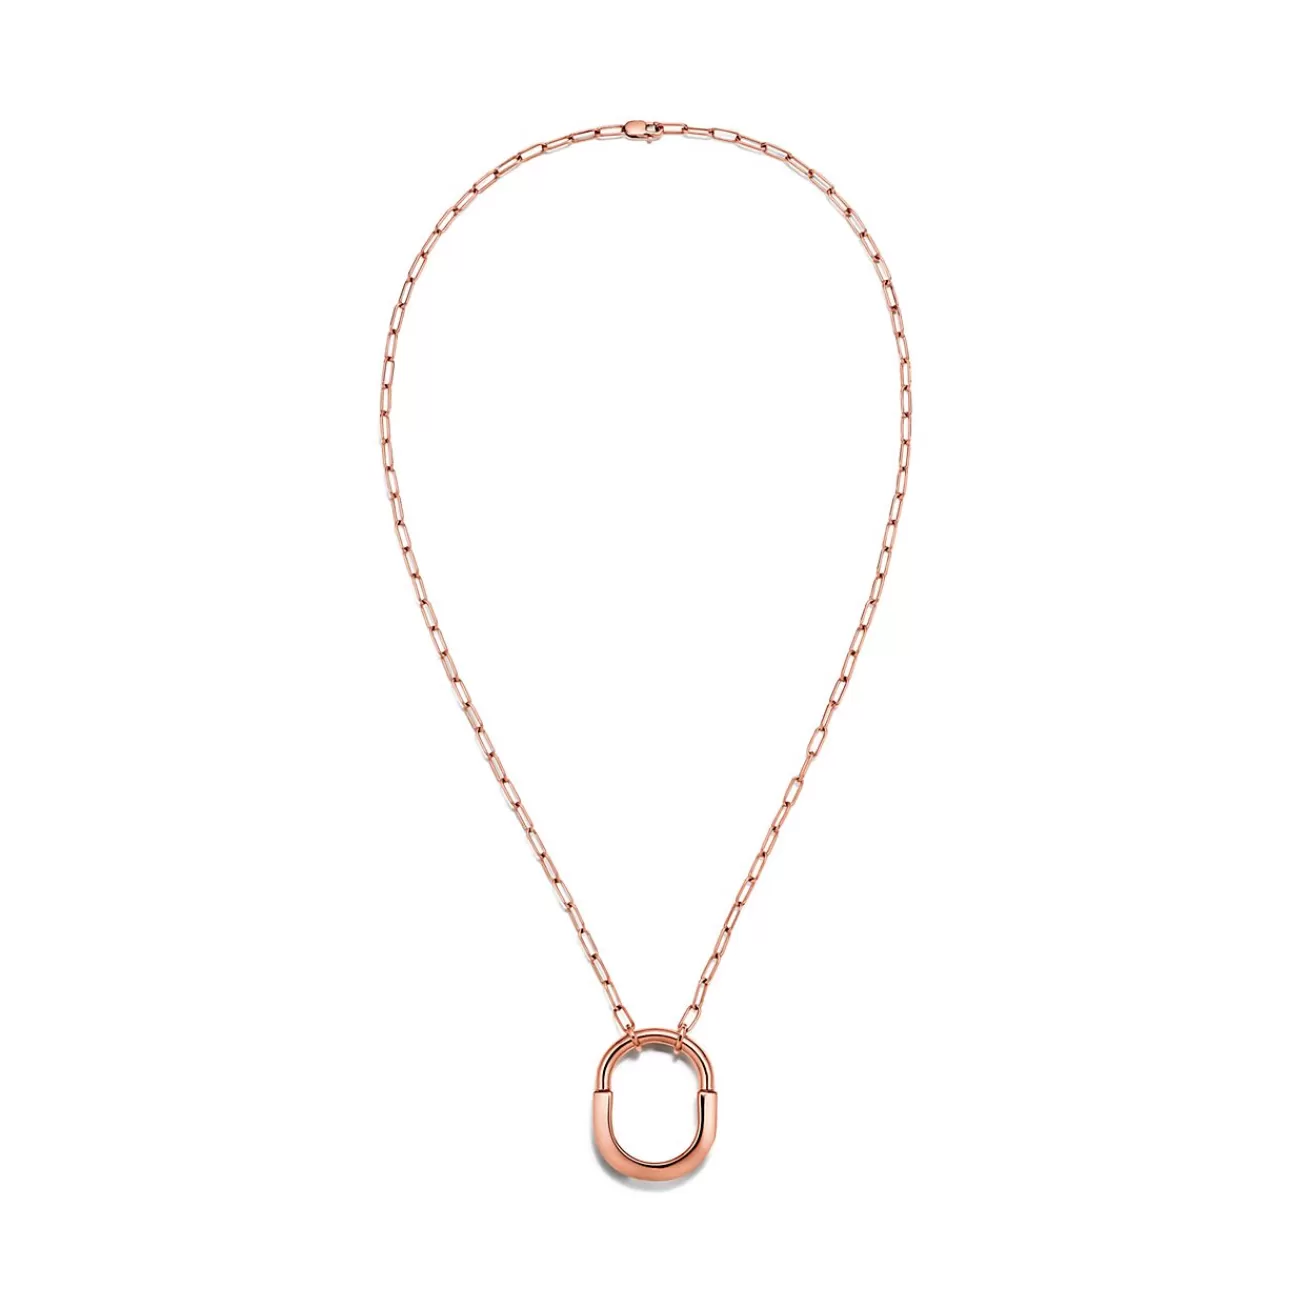 Tiffany & Co. Tiffany Lock Pendant in Rose Gold, Medium | ^ Necklaces & Pendants | Rose Gold Jewelry